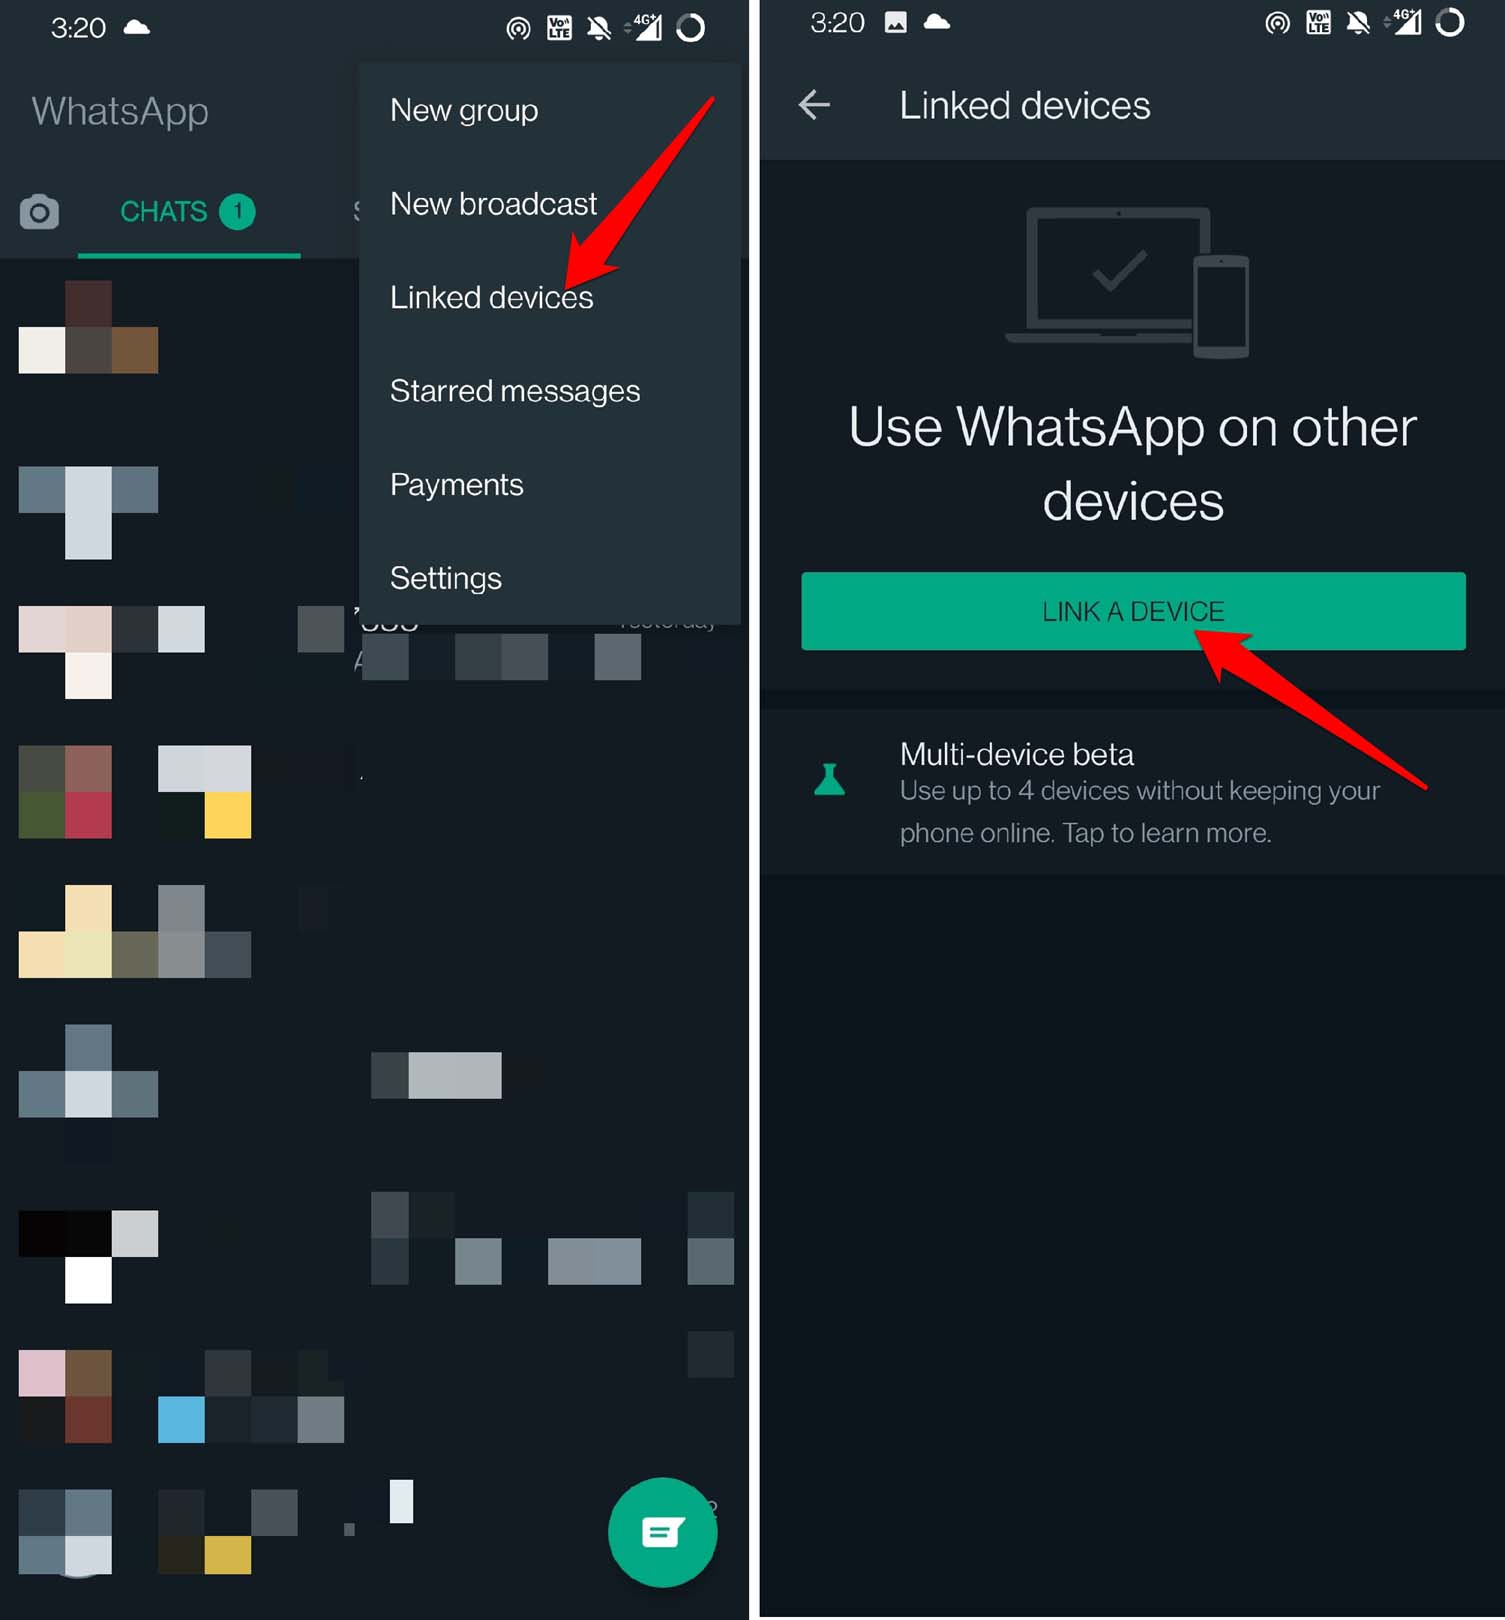 whatsapp link a device